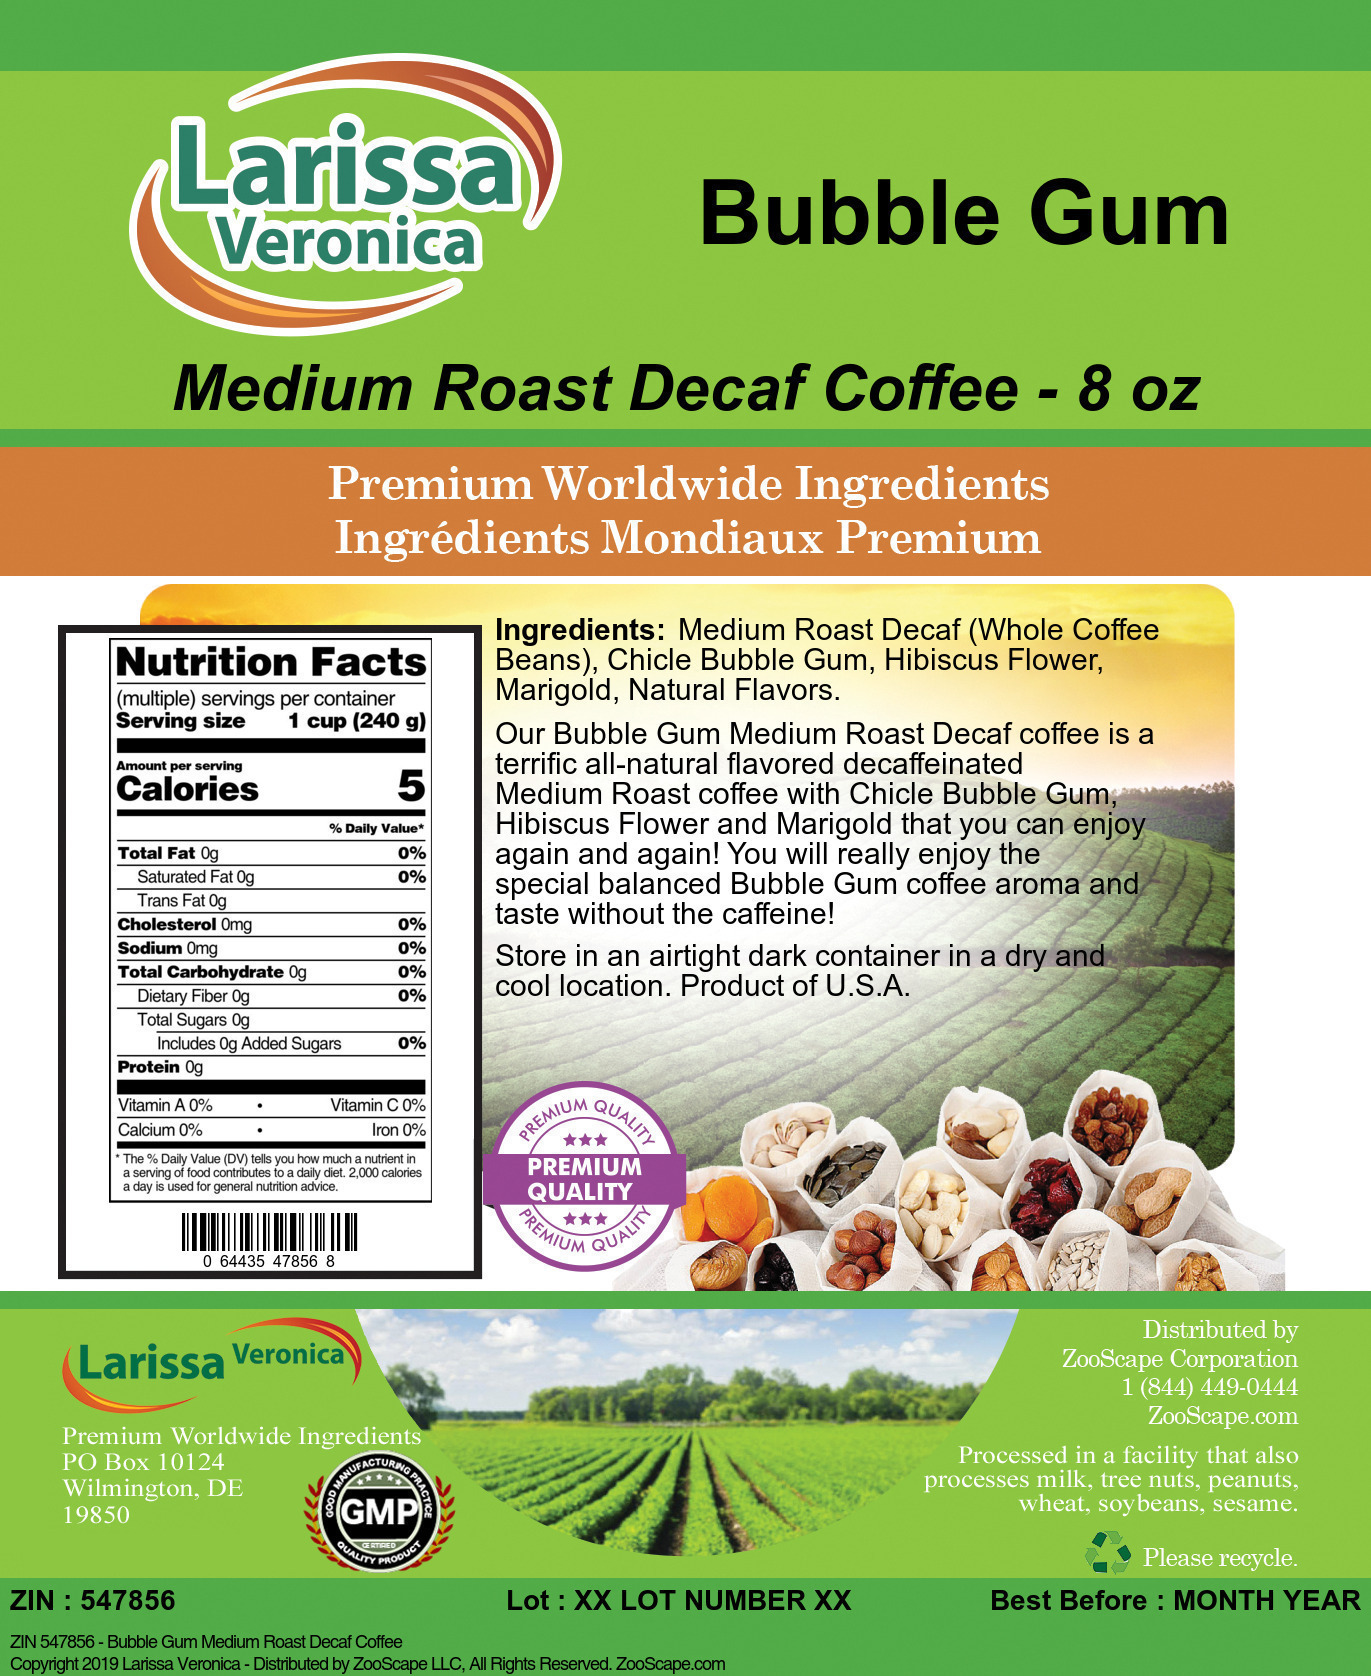 Bubble Gum Medium Roast Decaf Coffee - Label